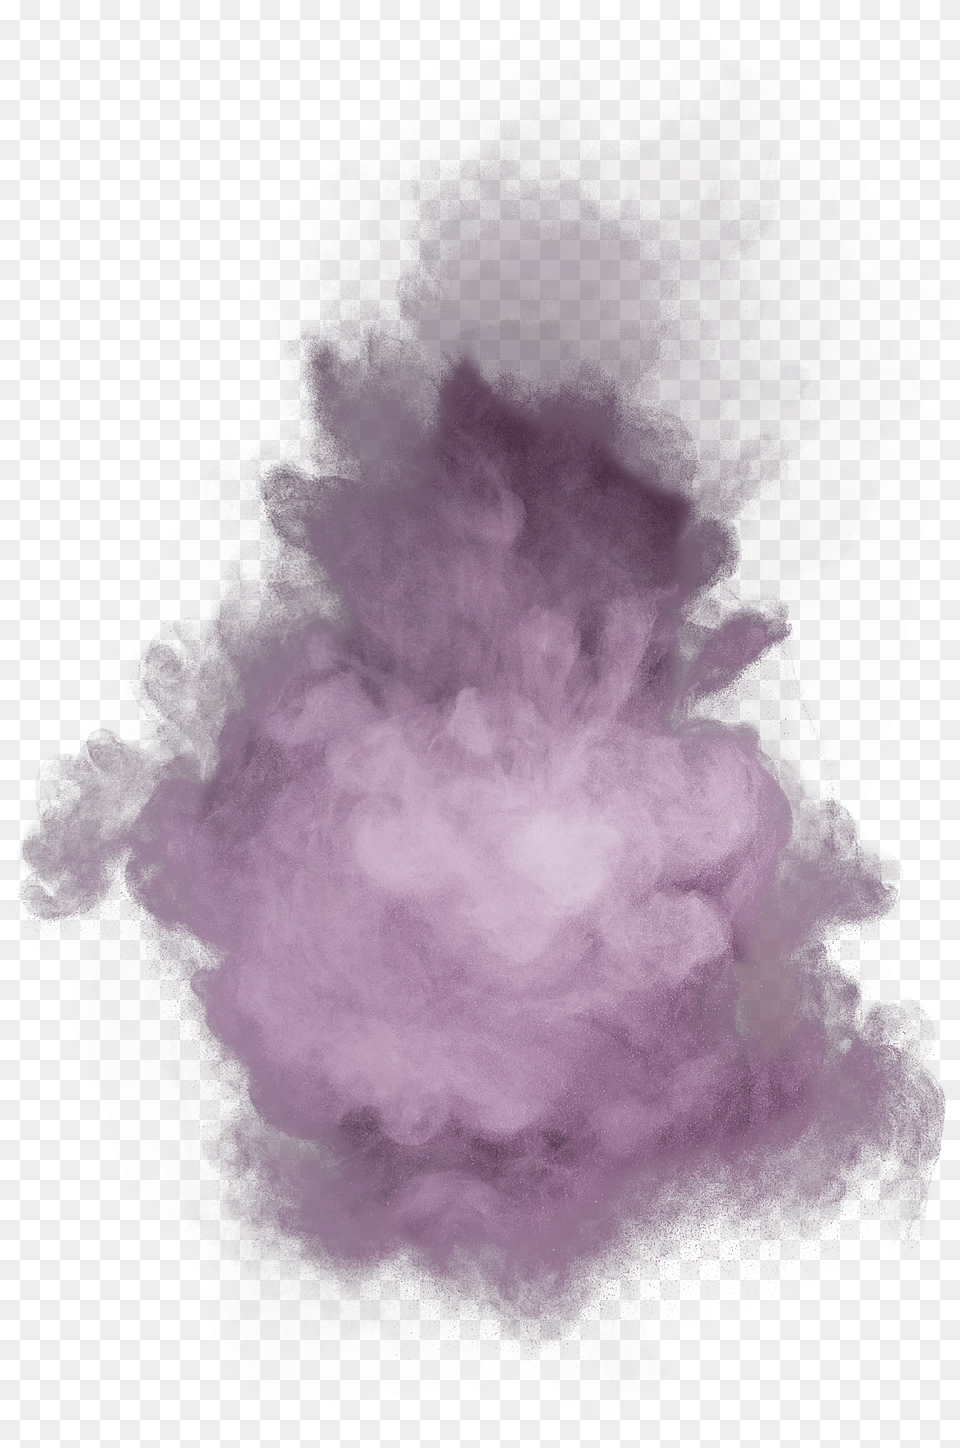 Purple Powder Explosive Material Png